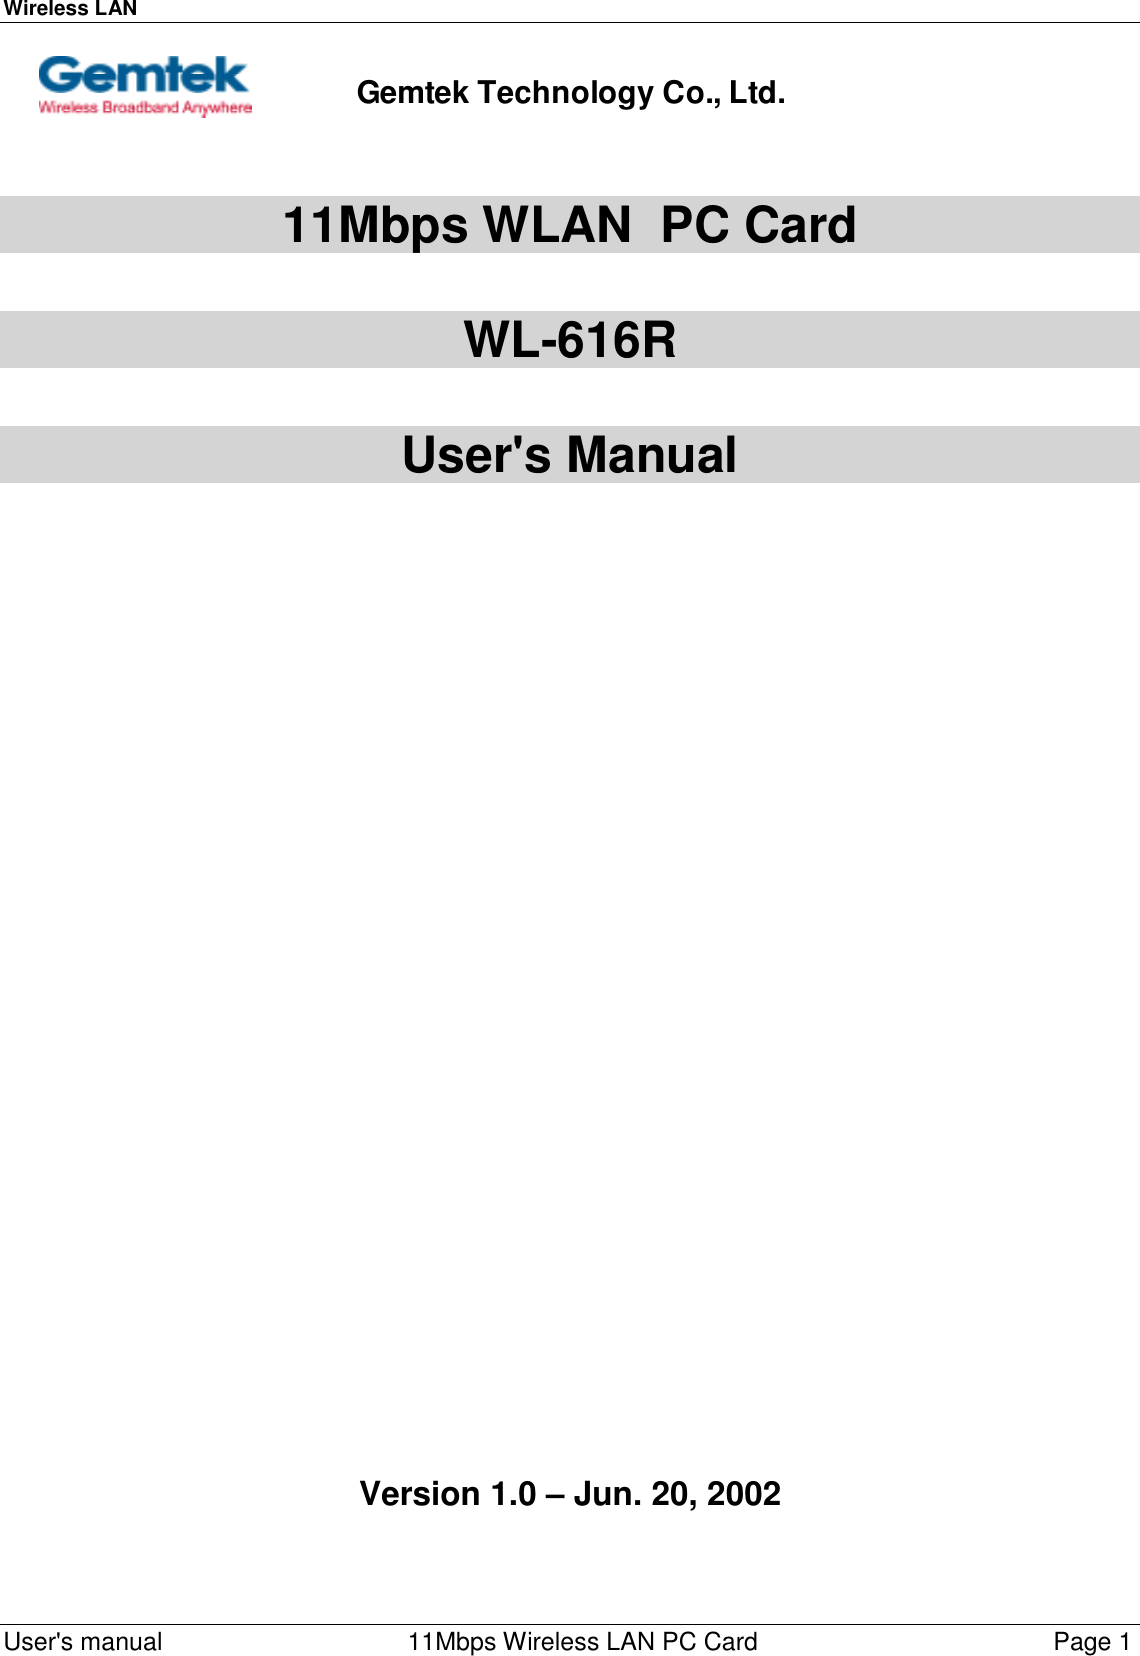 Wireless LAN  User&apos;s manual    11Mbps Wireless LAN PC Card Page 1                         11Mbps WLAN  PC CardWL-616RUser&apos;s Manual   Version 1.0 – Jun. 20, 2002Gemtek Technology Co., Ltd.